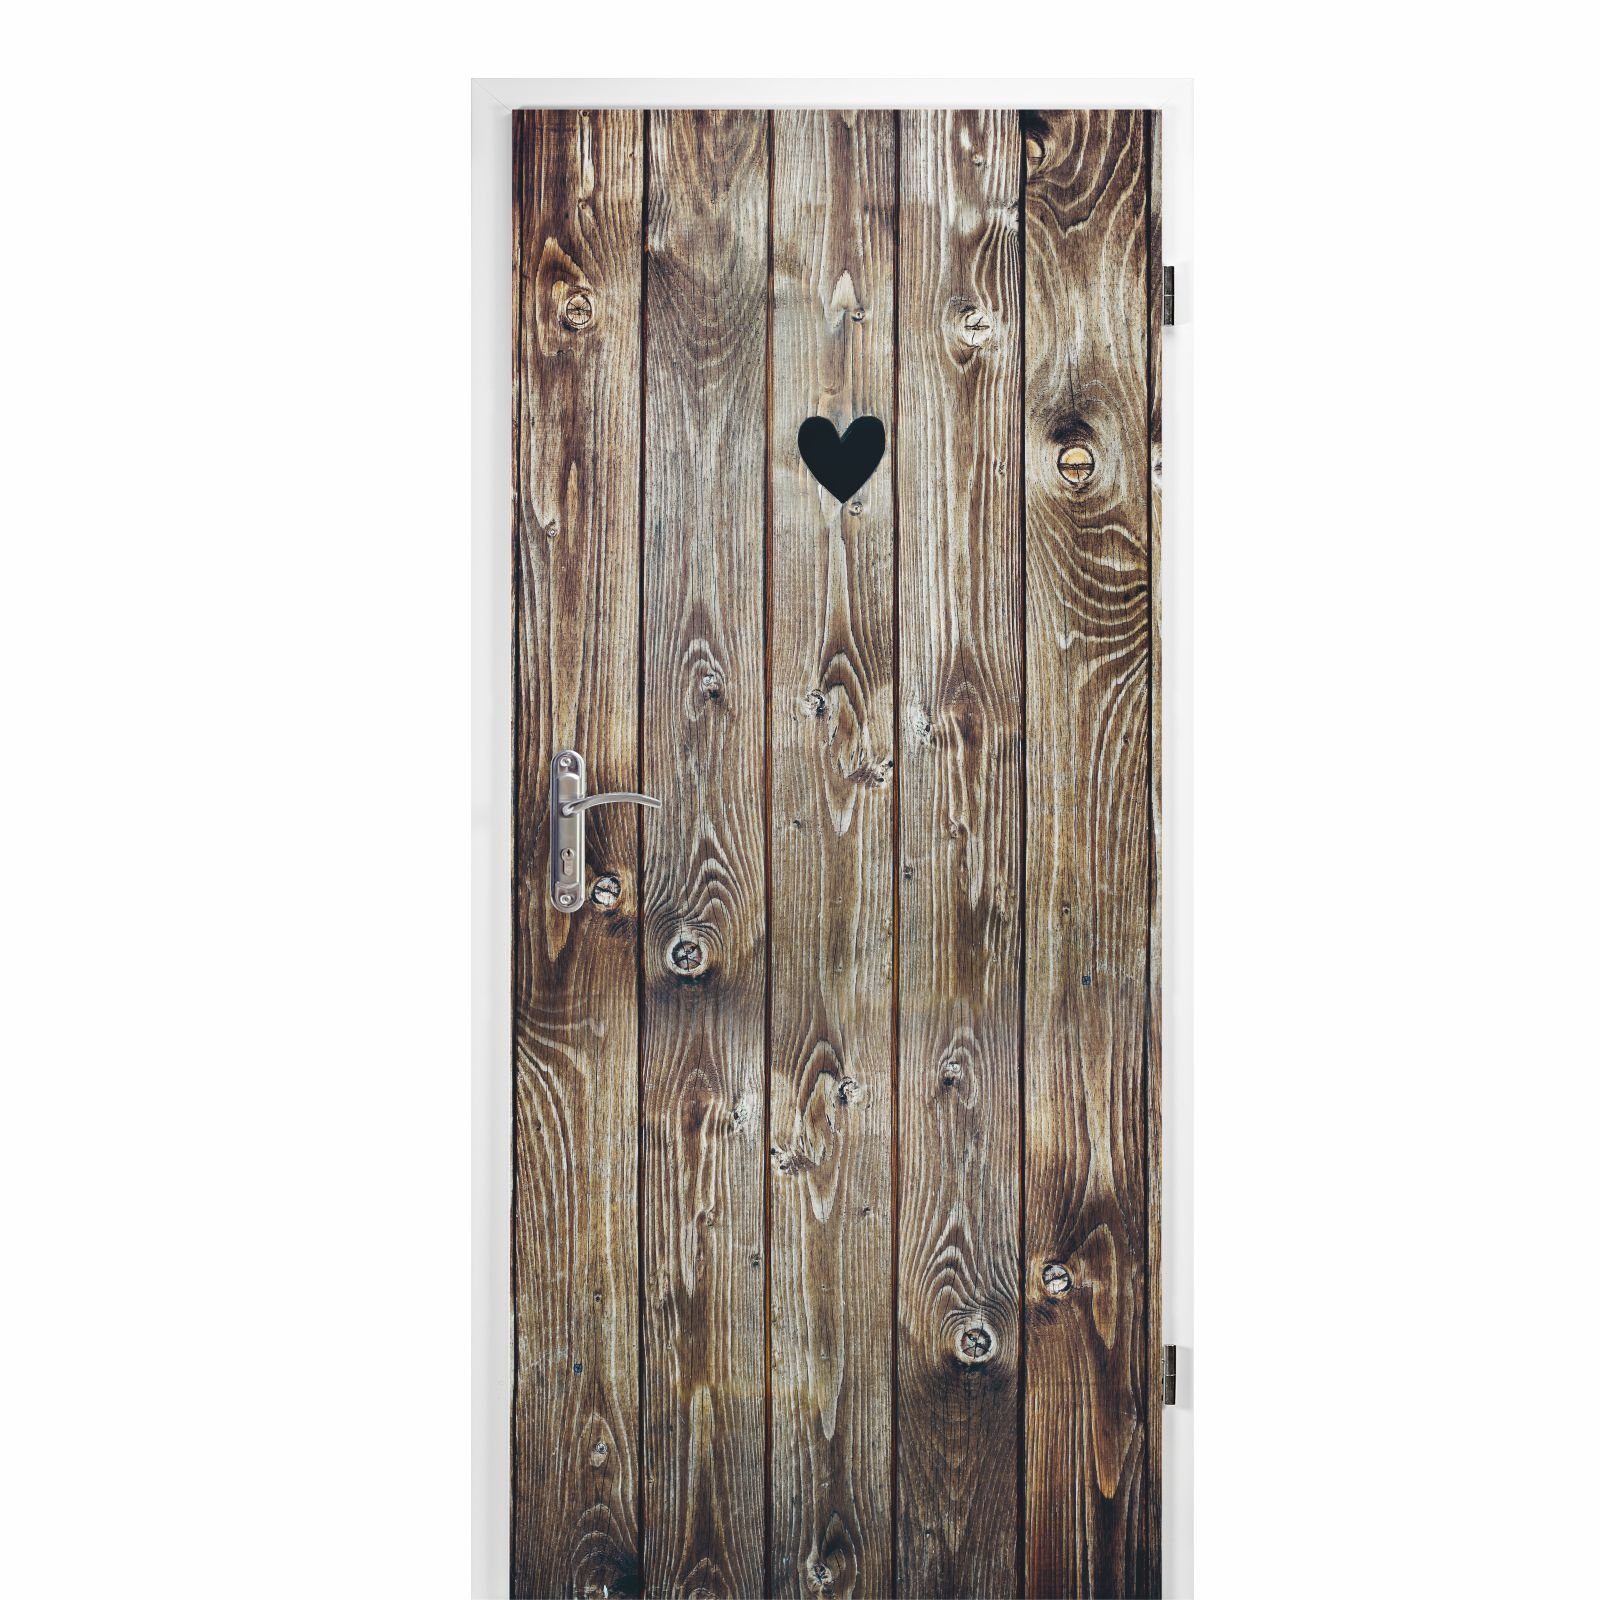 nikima Wandtattoo TB-14 selbstklebendes Türbild – Holztür Herz (PVC-Folie), 0,9 x 2 m selbstklebende Folie